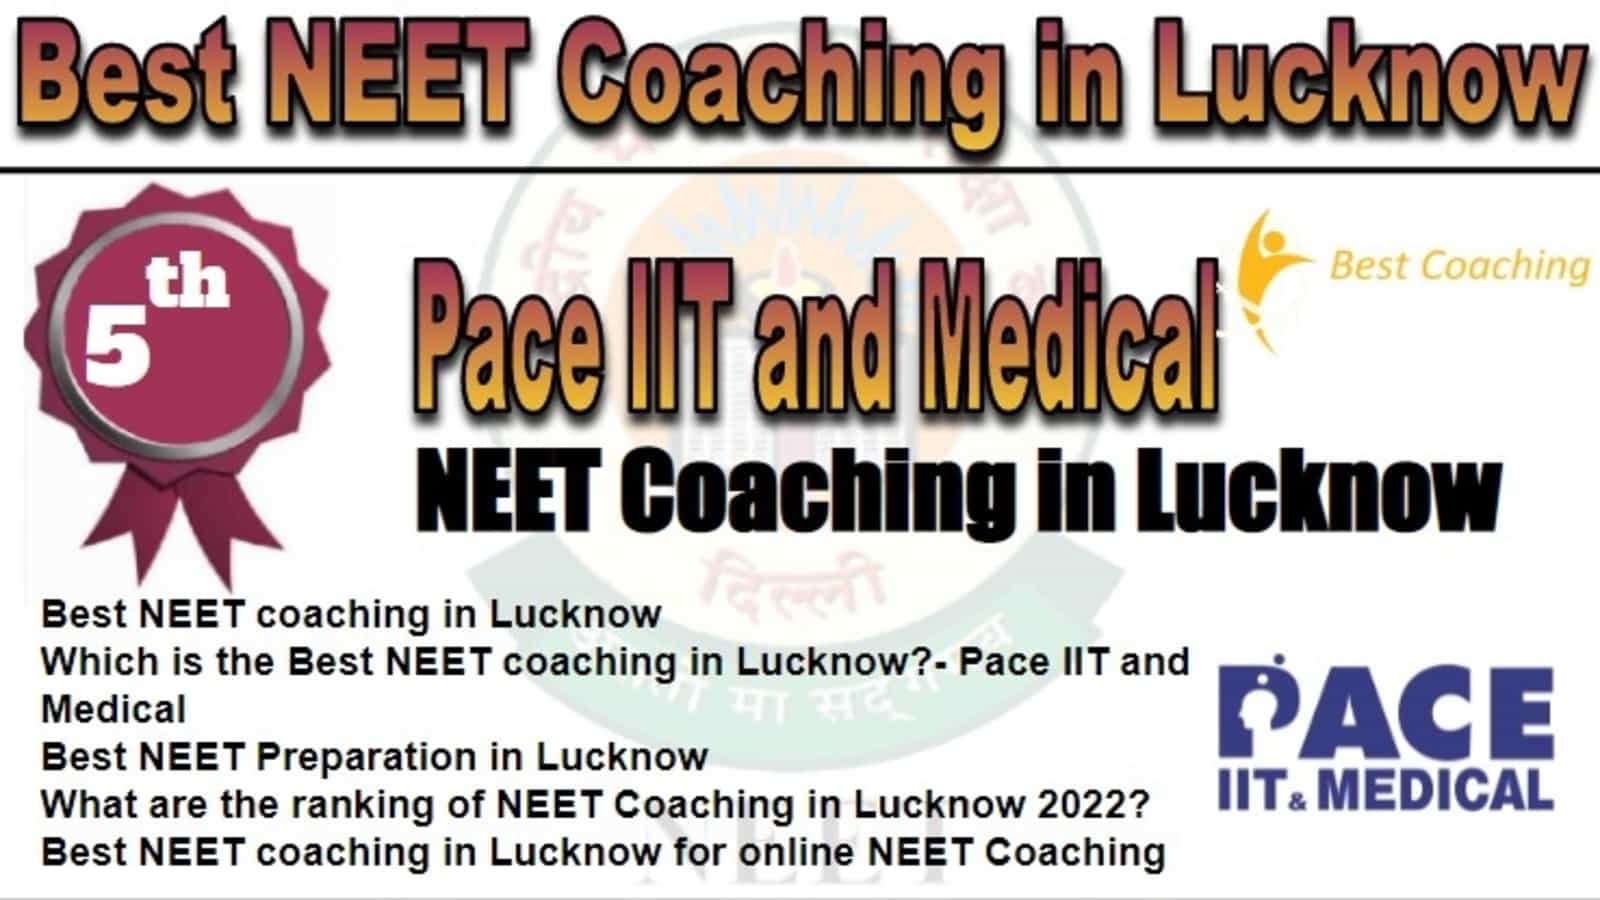 Rank 5 Best NEET Coaching in Lucknow